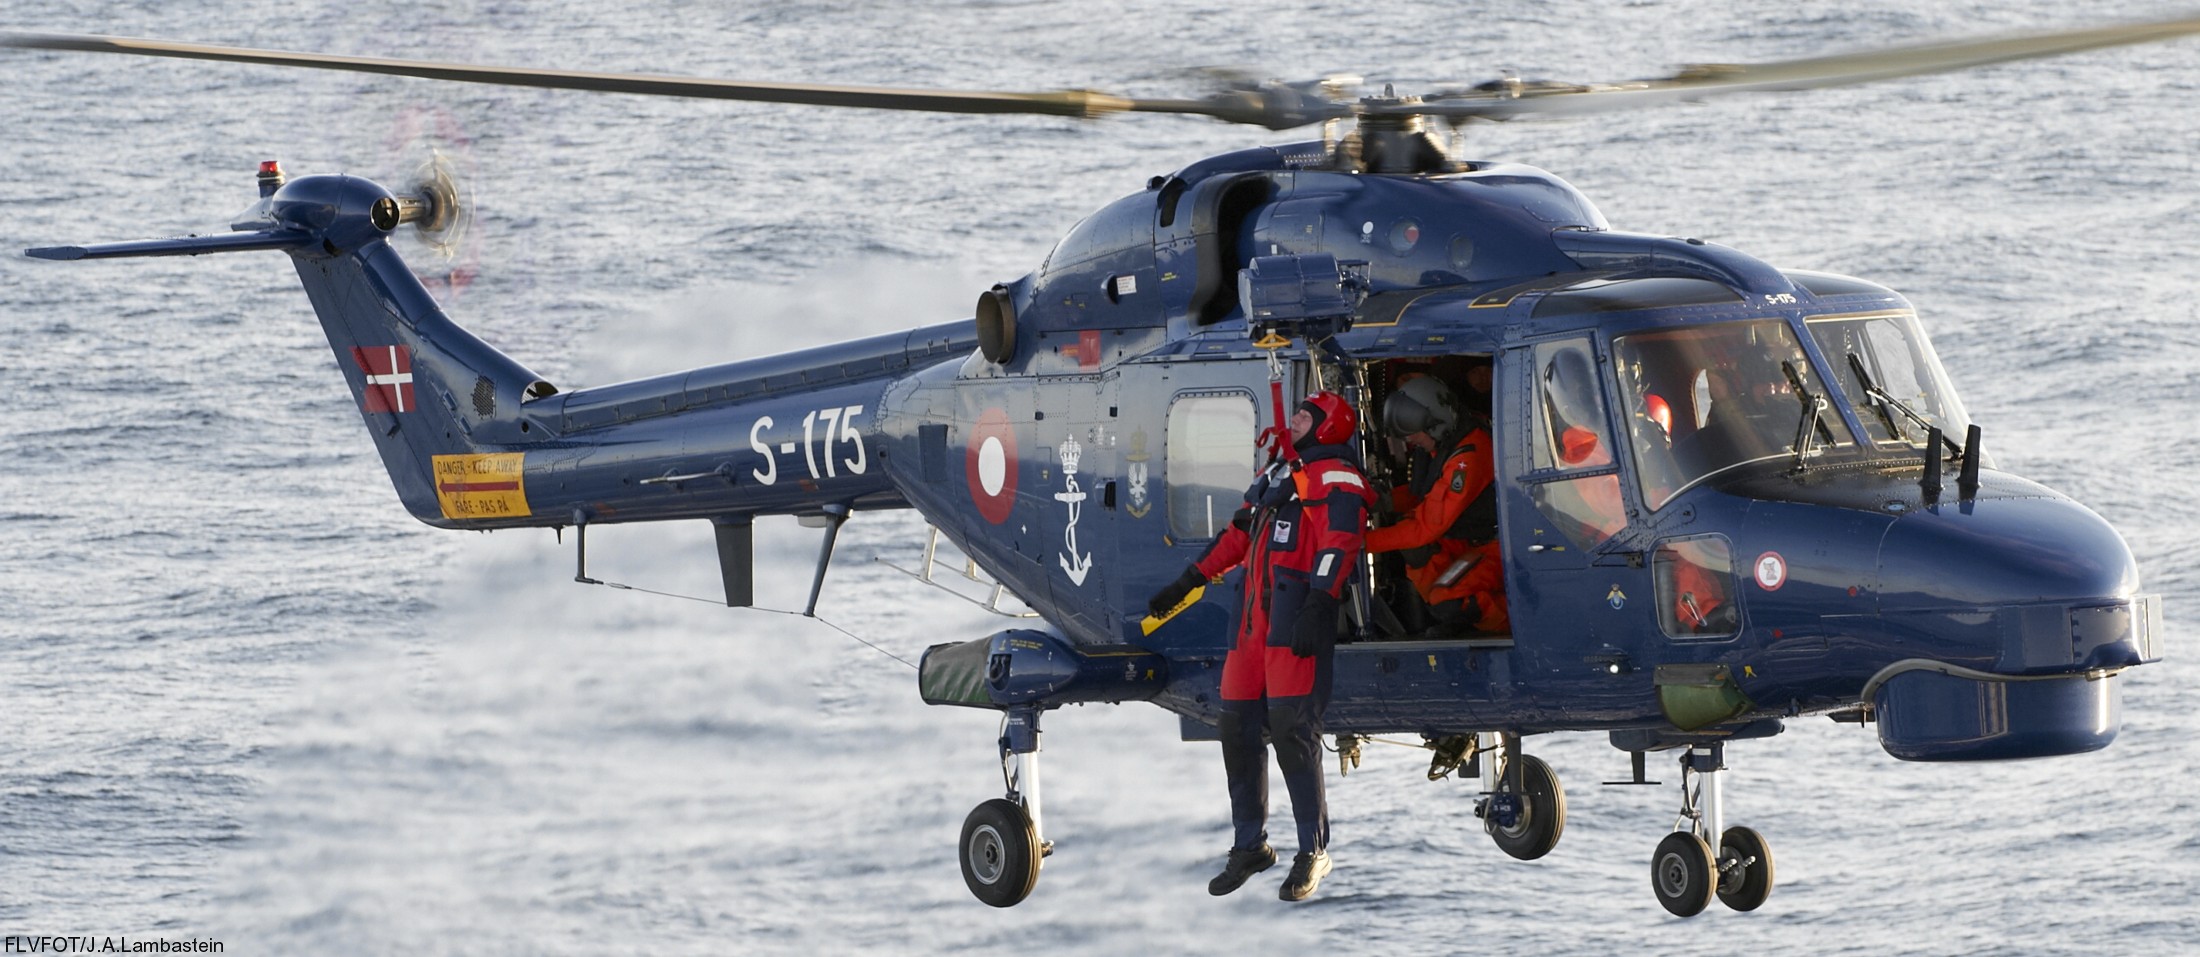 lynx mk.80 mk.90b helicopter westland royal danish navy air force kongelige danske marine flyvevabnet s-175 16